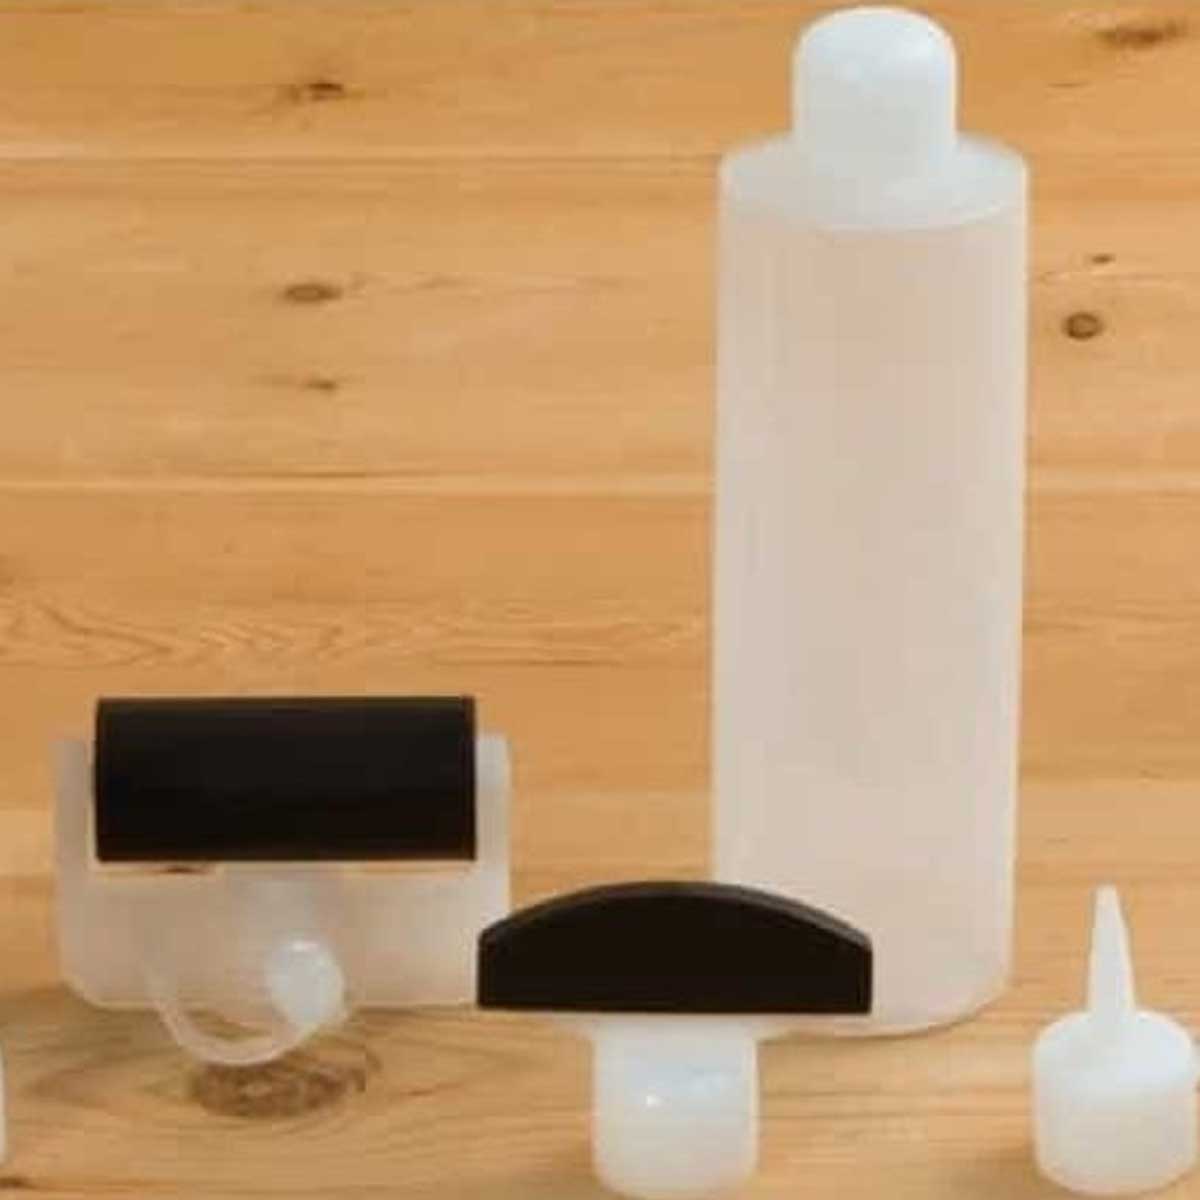 Glue Bottle Applicator Set Manufacturers, Suppliers in Karnataka